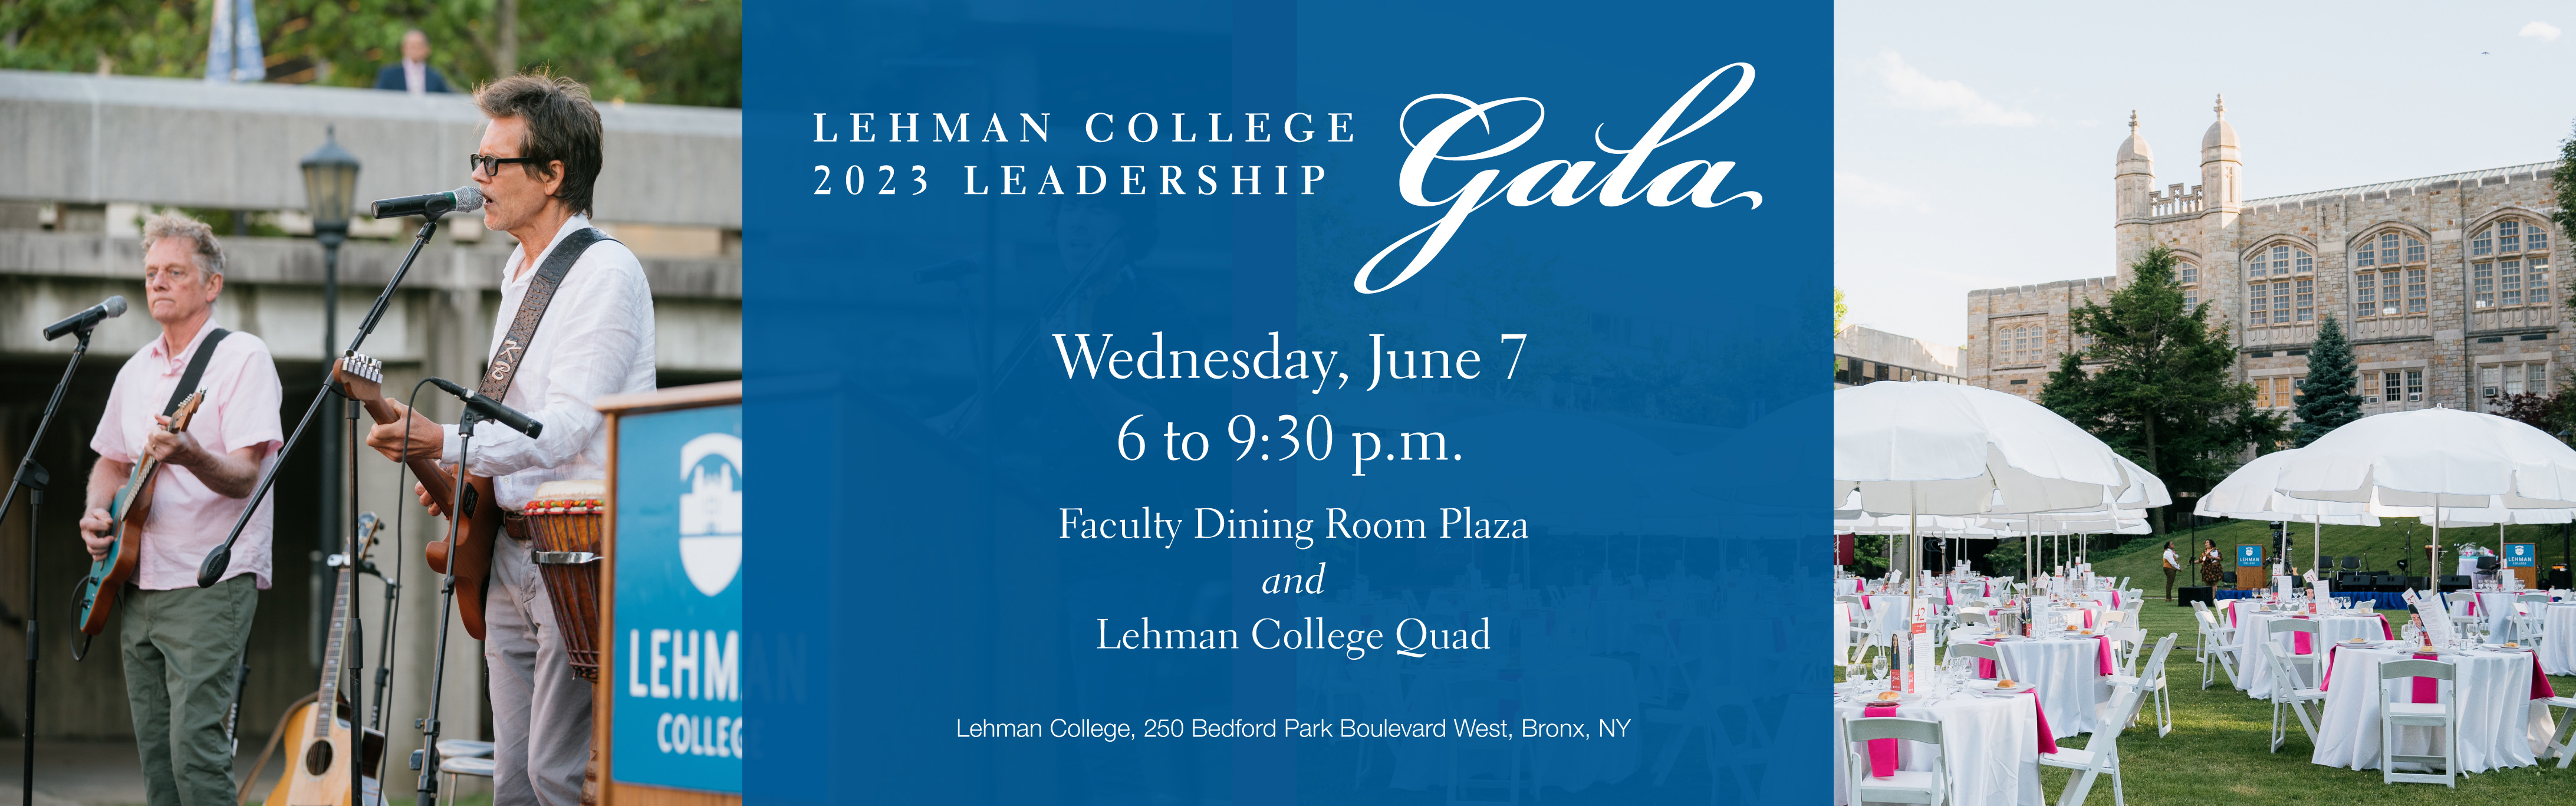 Lehman College Gala 2023